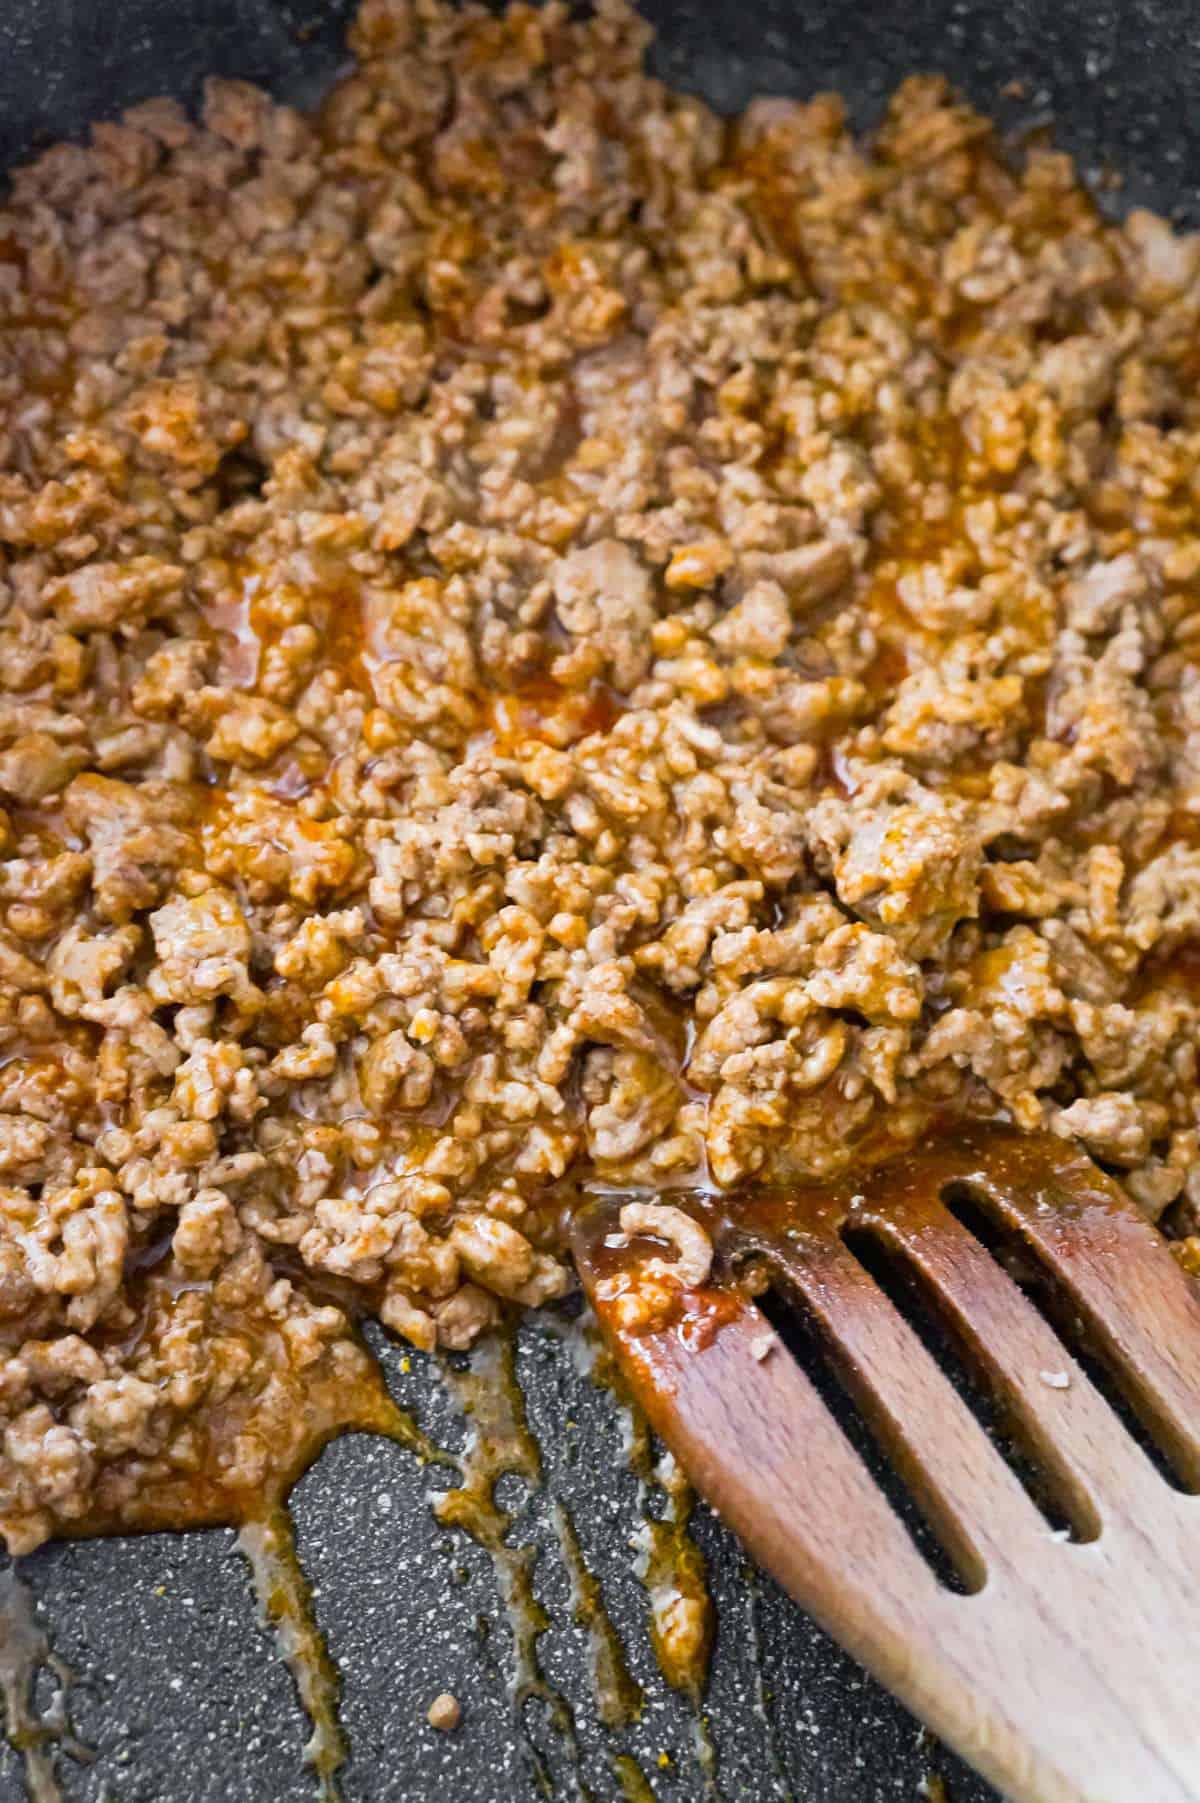 ground beef tossed in taco seasoning in a saute pan